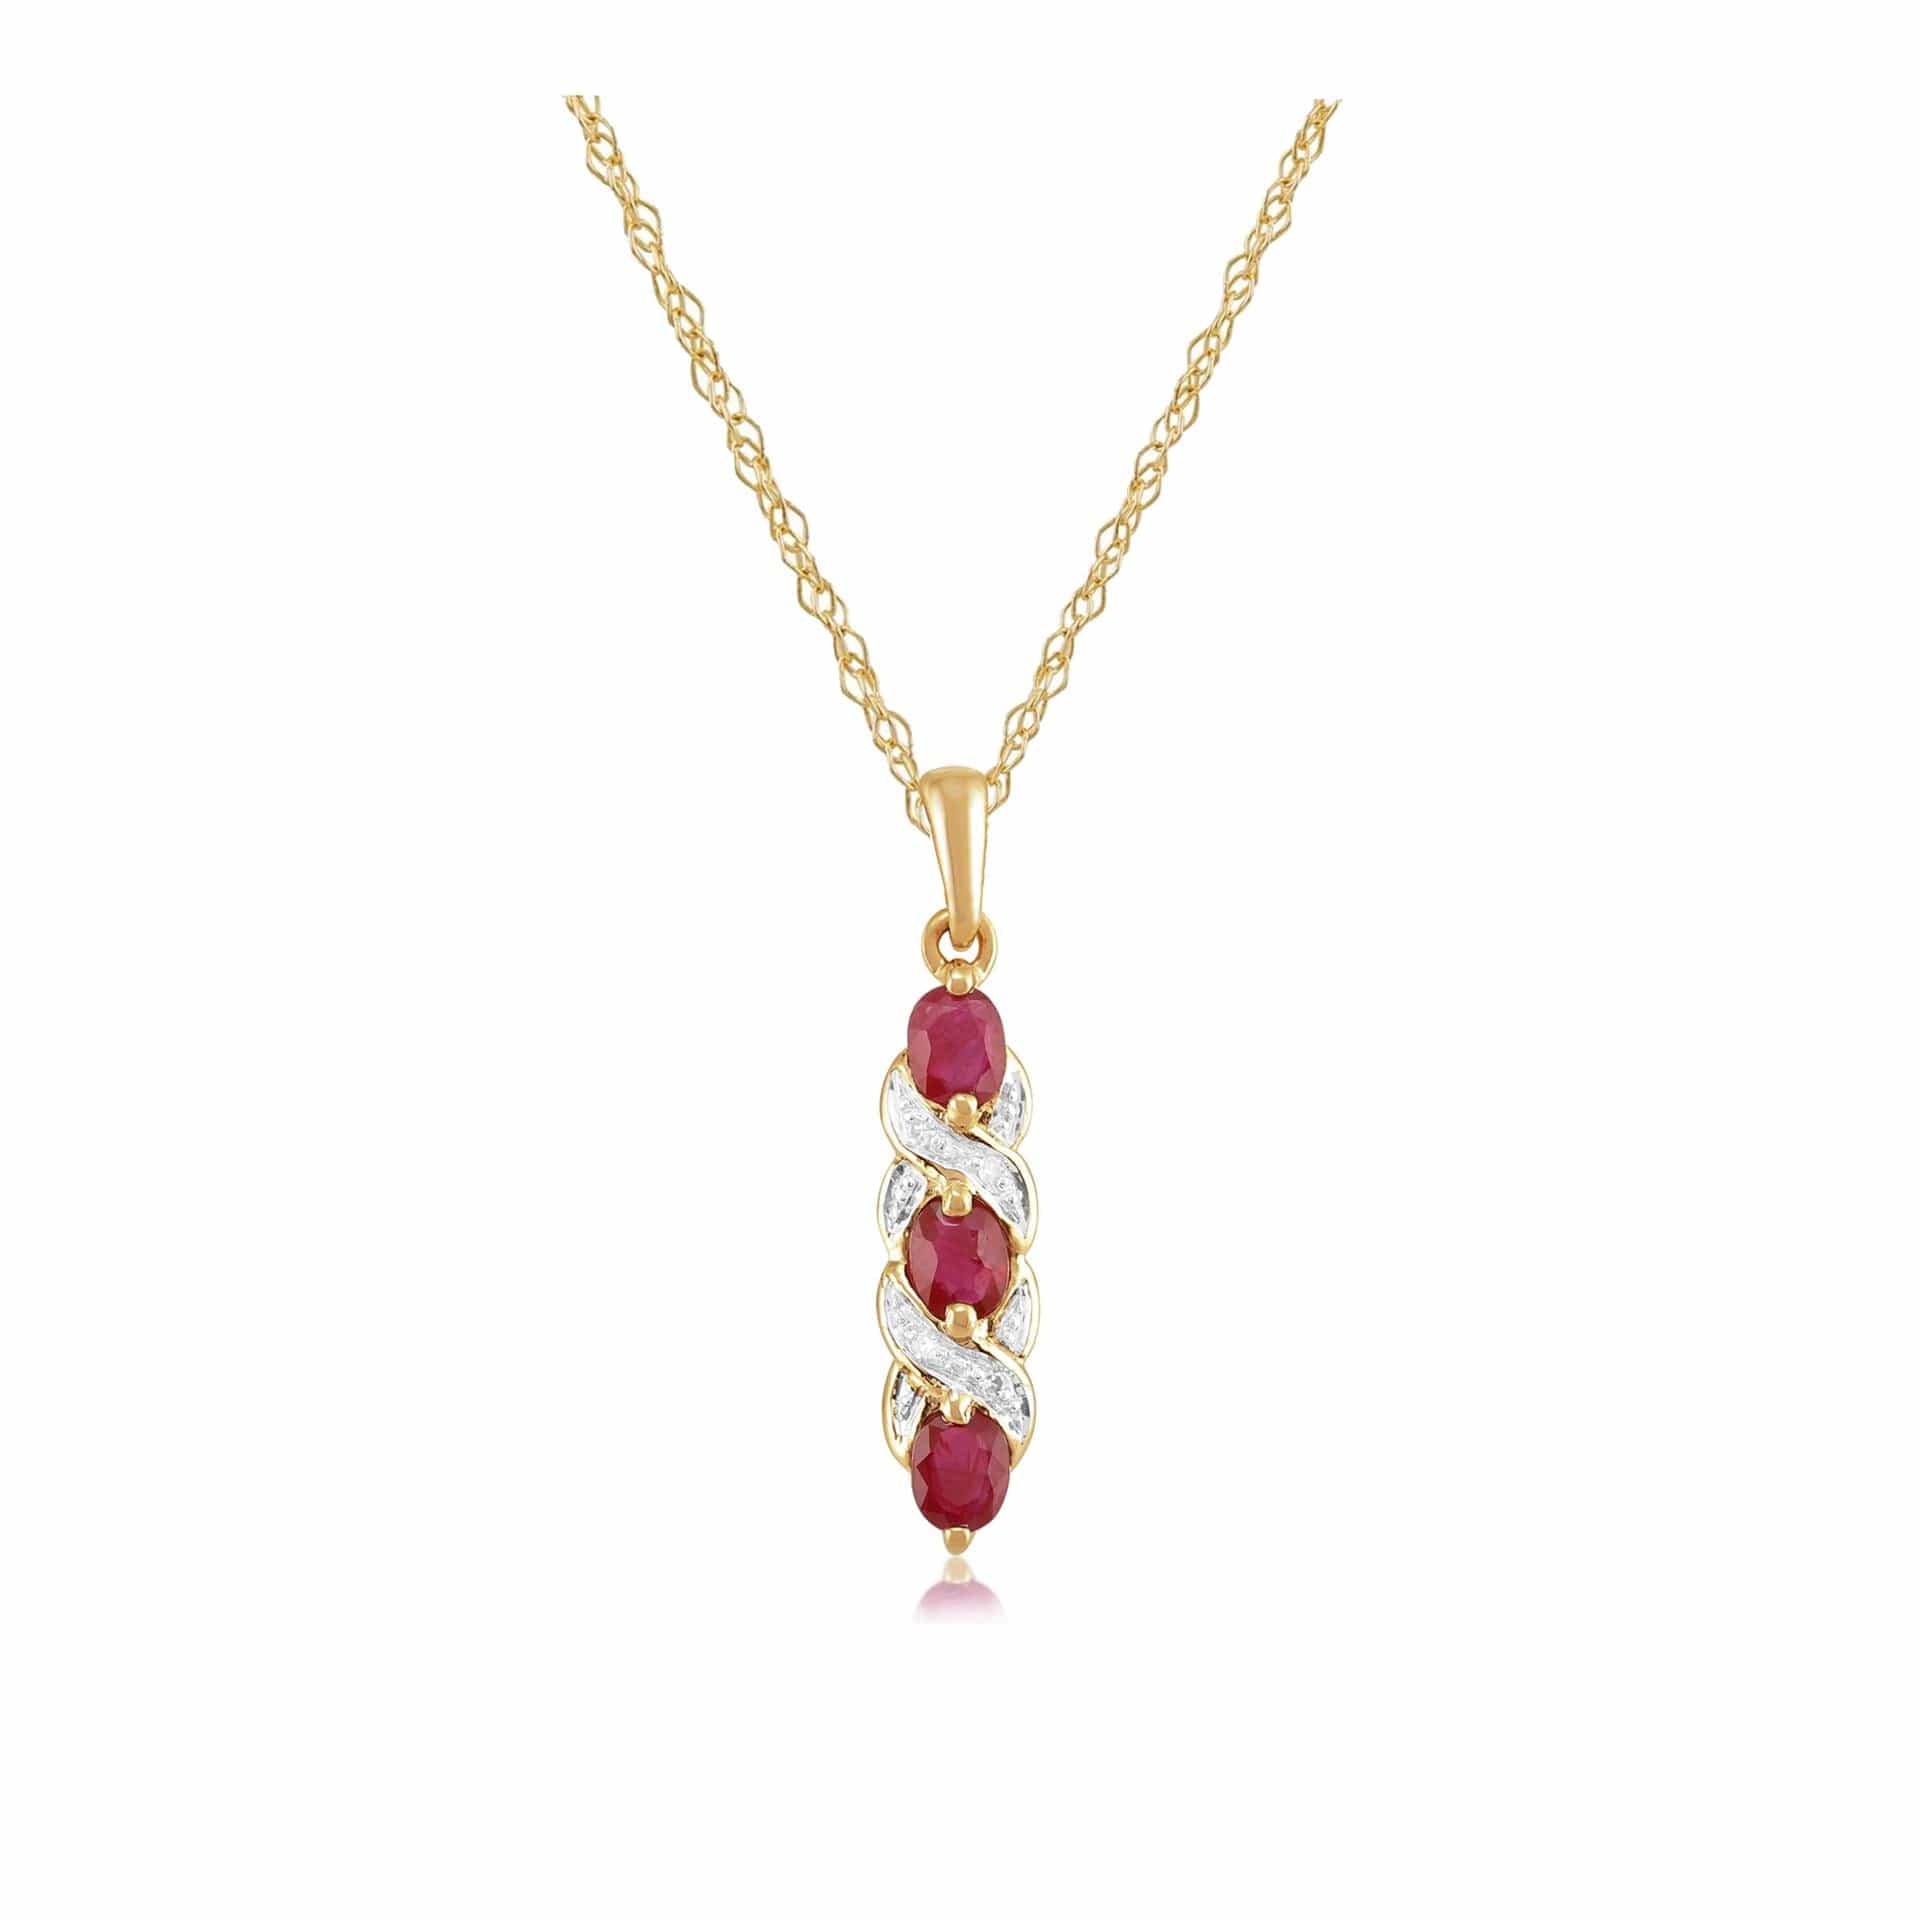 8189 Art Nouveau Style Ruby & Diamond Pendant in 9ct Yellow Gold  1